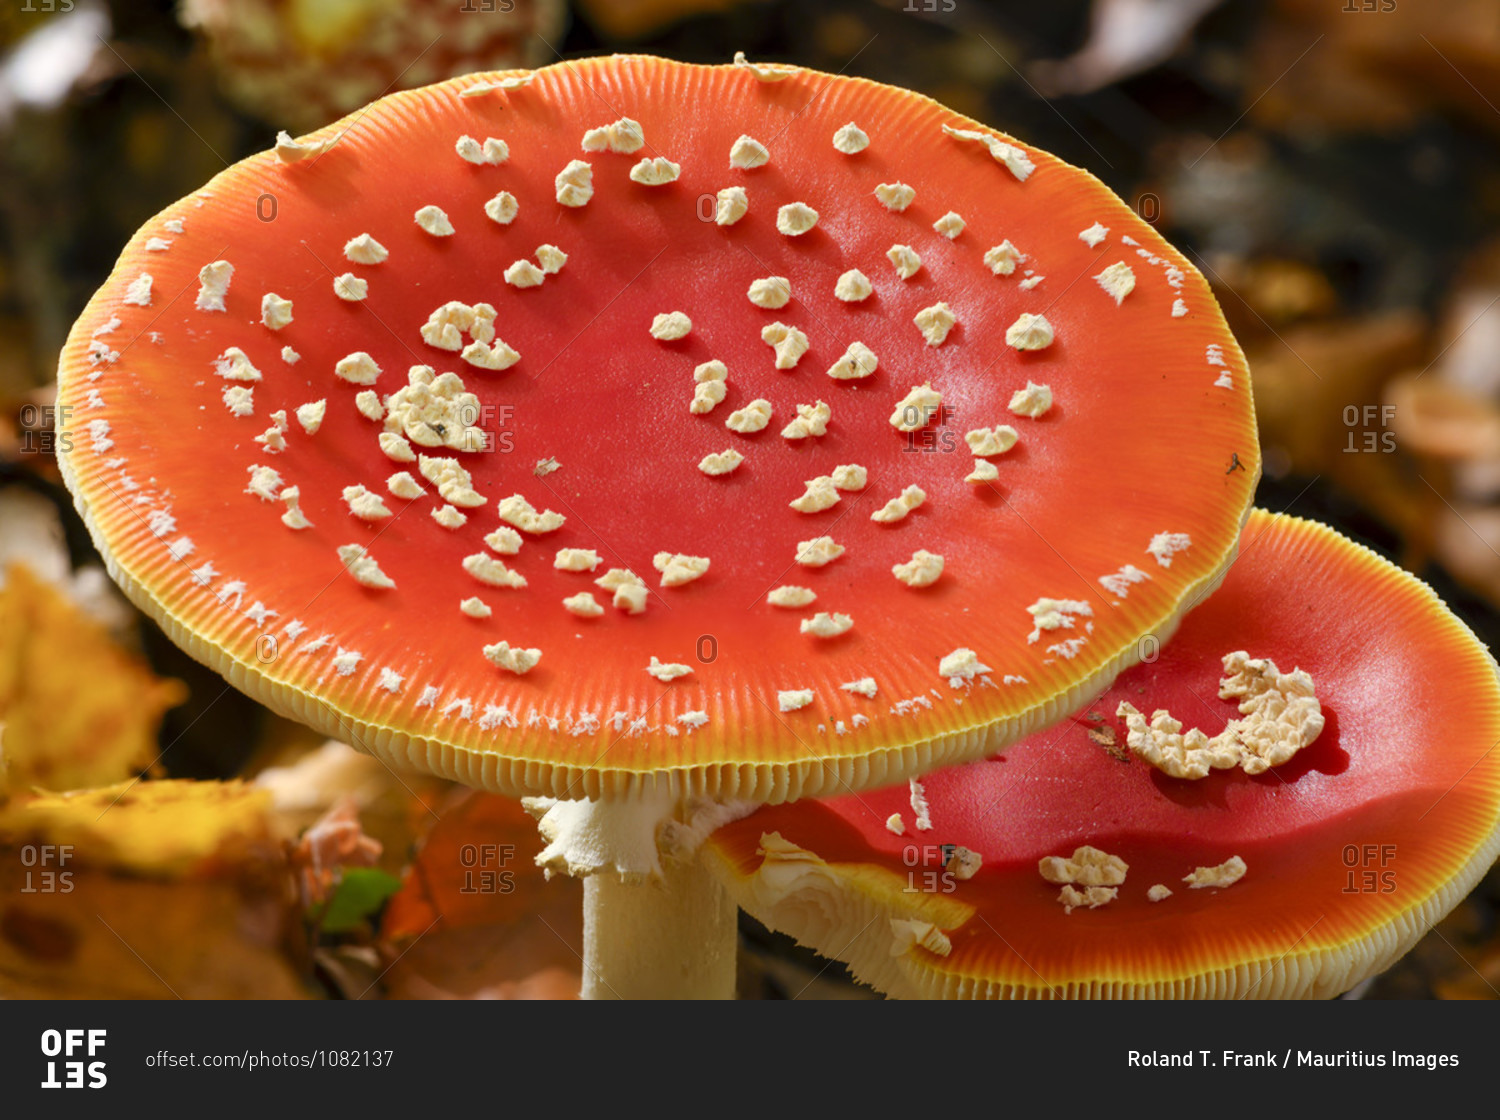 Toadstool (Amanita muscaria), red toadstool, poisonous mushroom species.